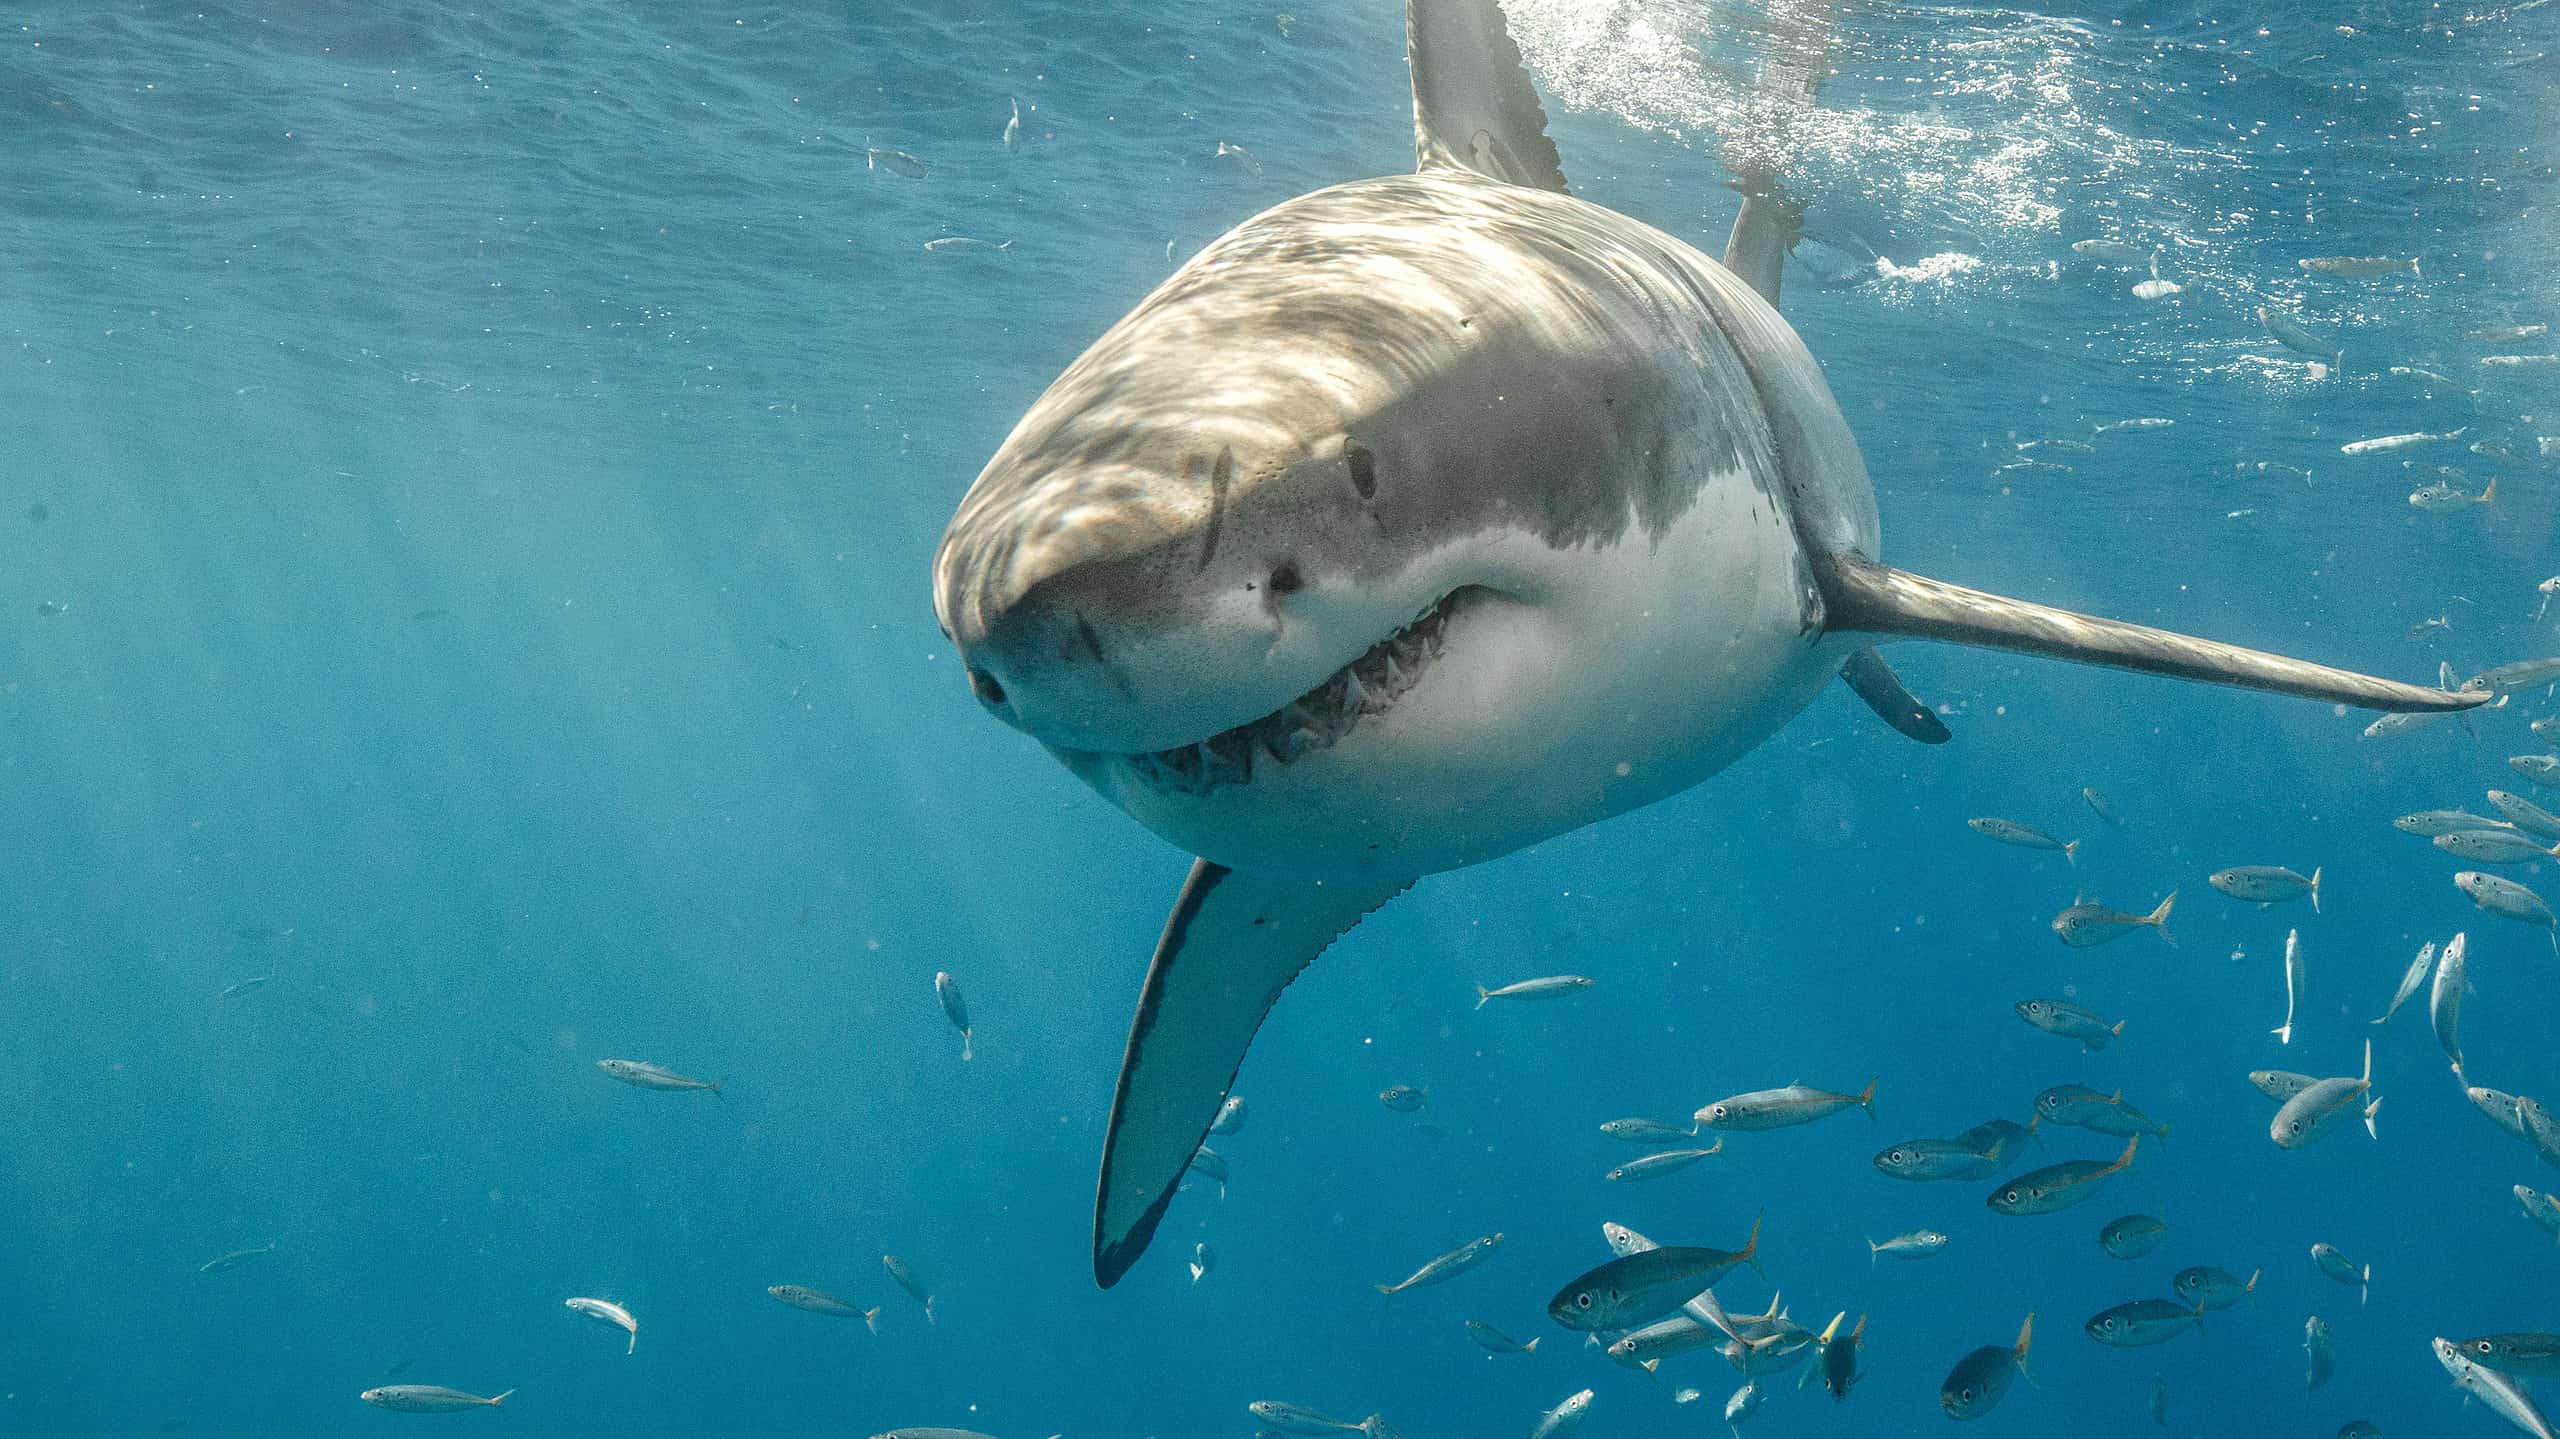 Great white sharks are the ocean's apex predators.